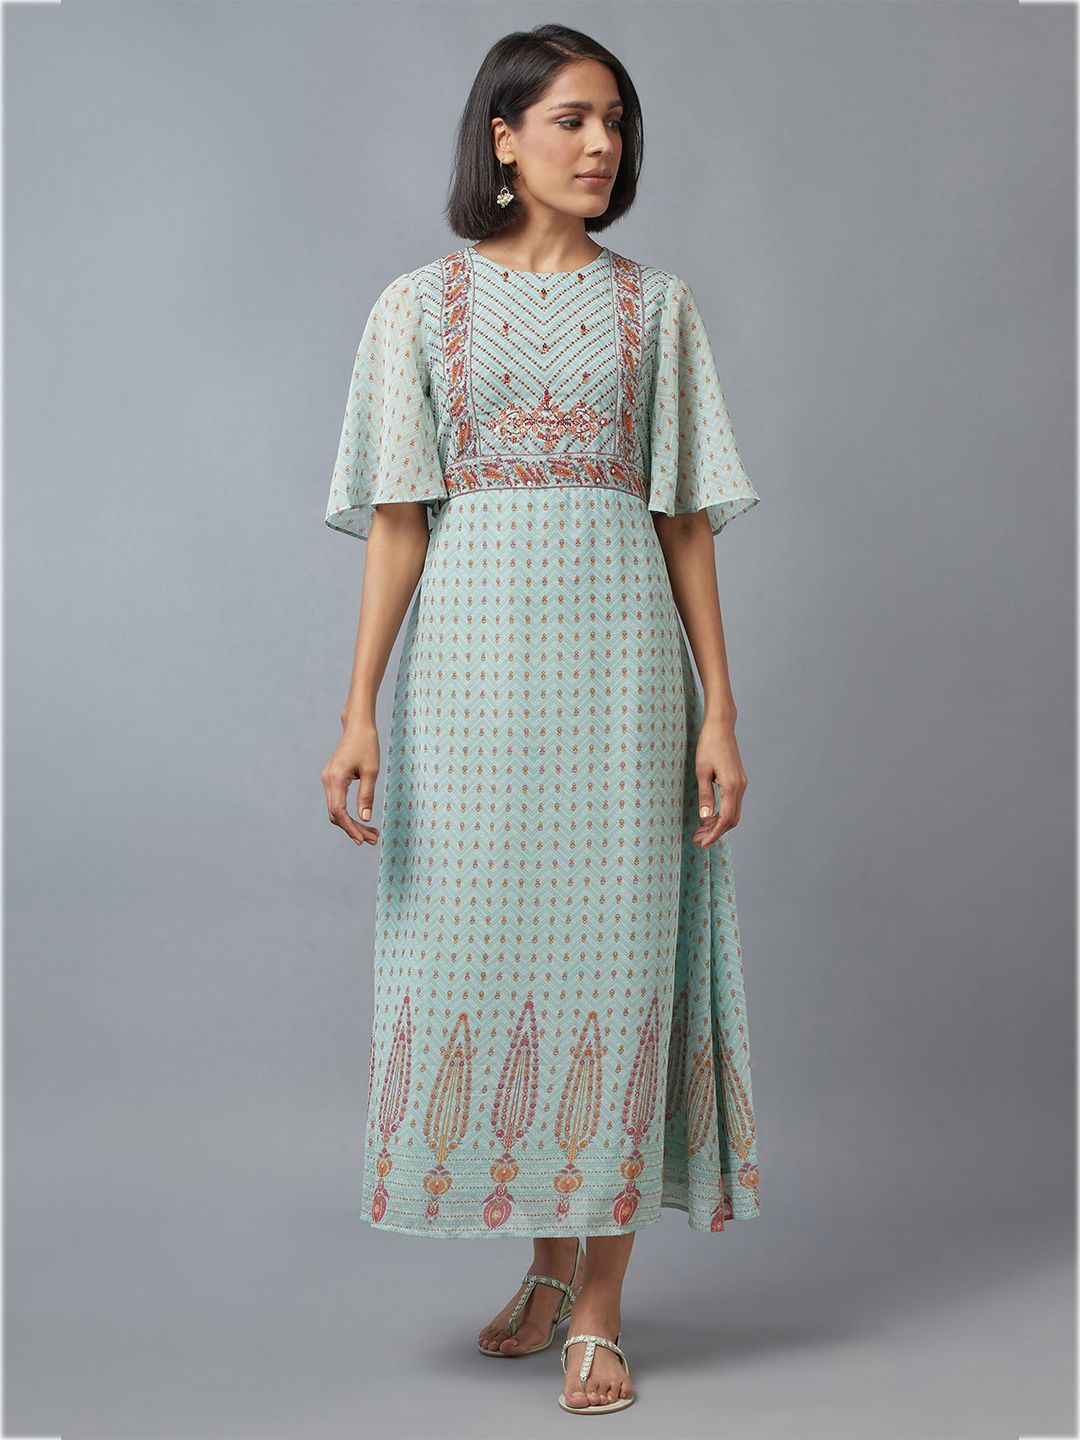 W Green Ethnic Maxi Dress Price in India